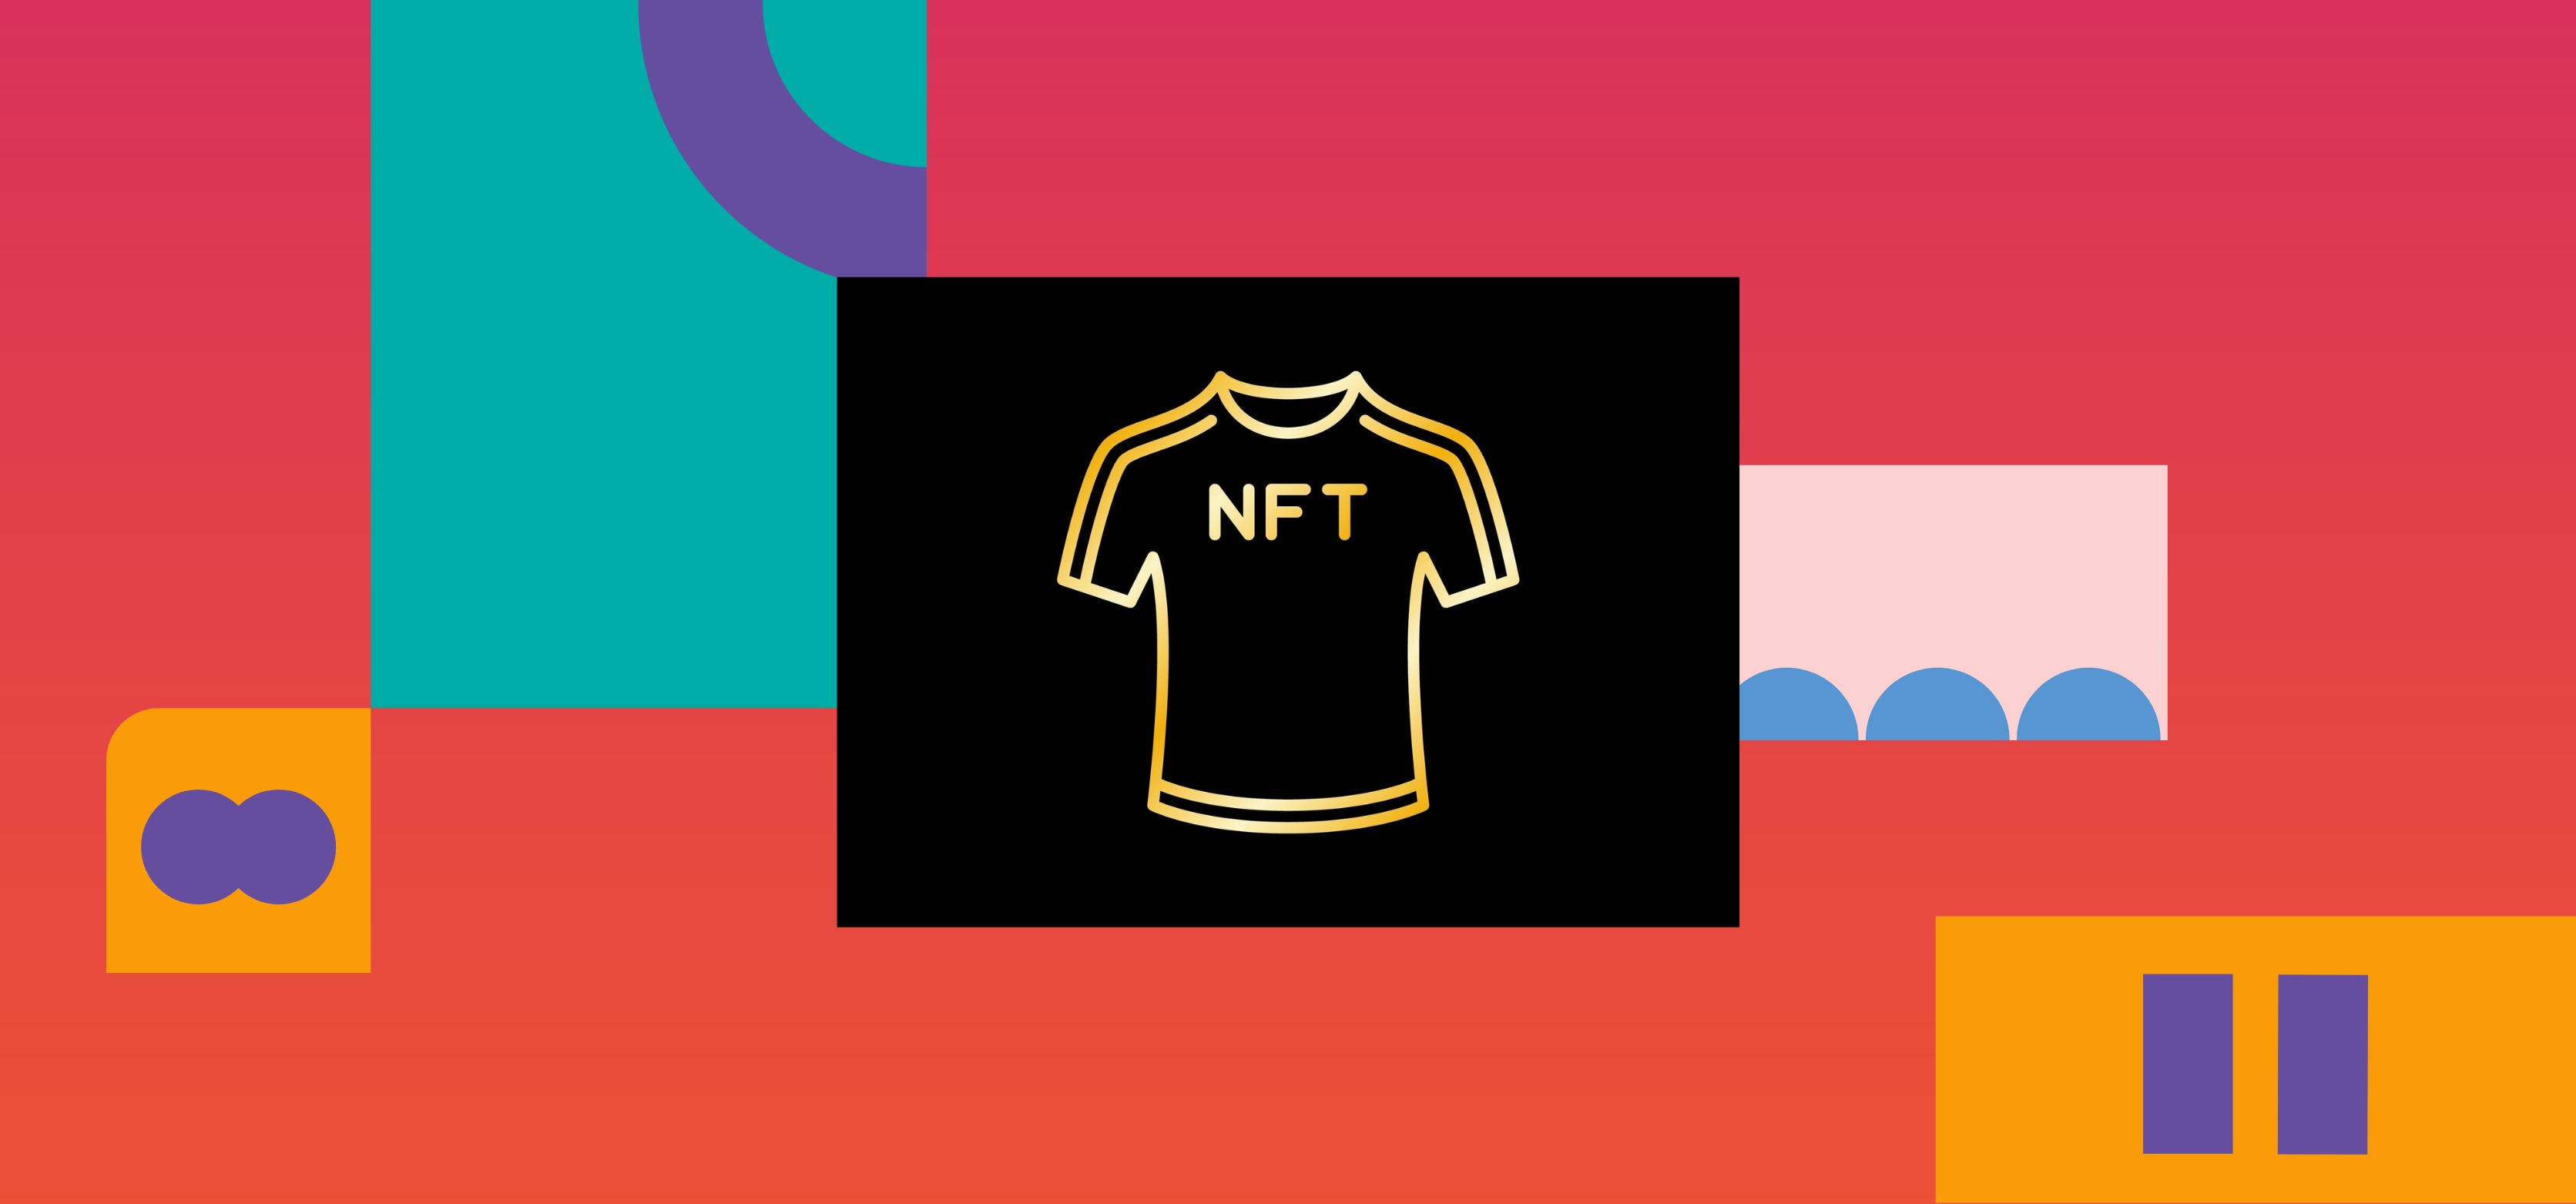 An illustration of a dark football shirt with NFT written across the front